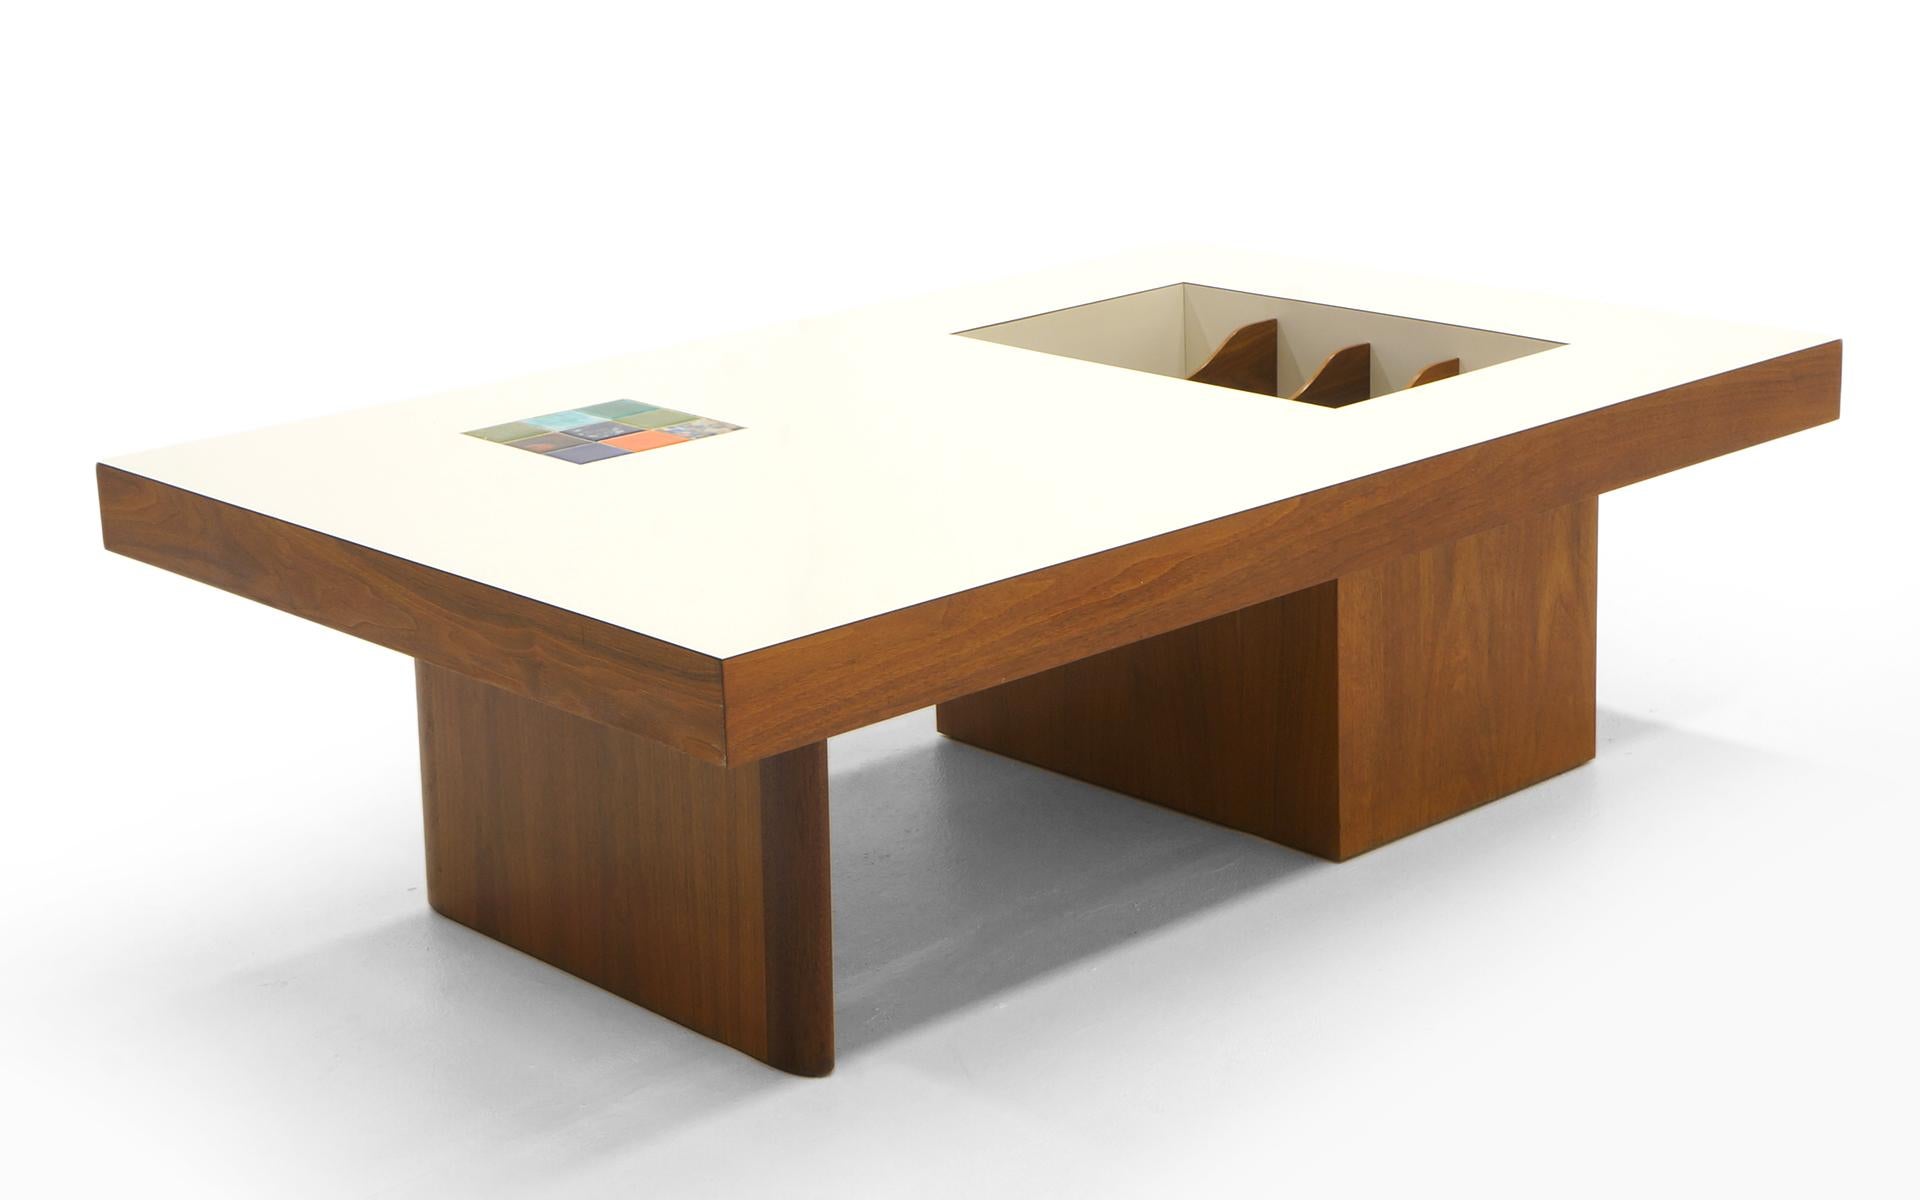 Ceramic Danish Modern Coffee Table with Built in Magazine / Album Storage, Tile Inlay